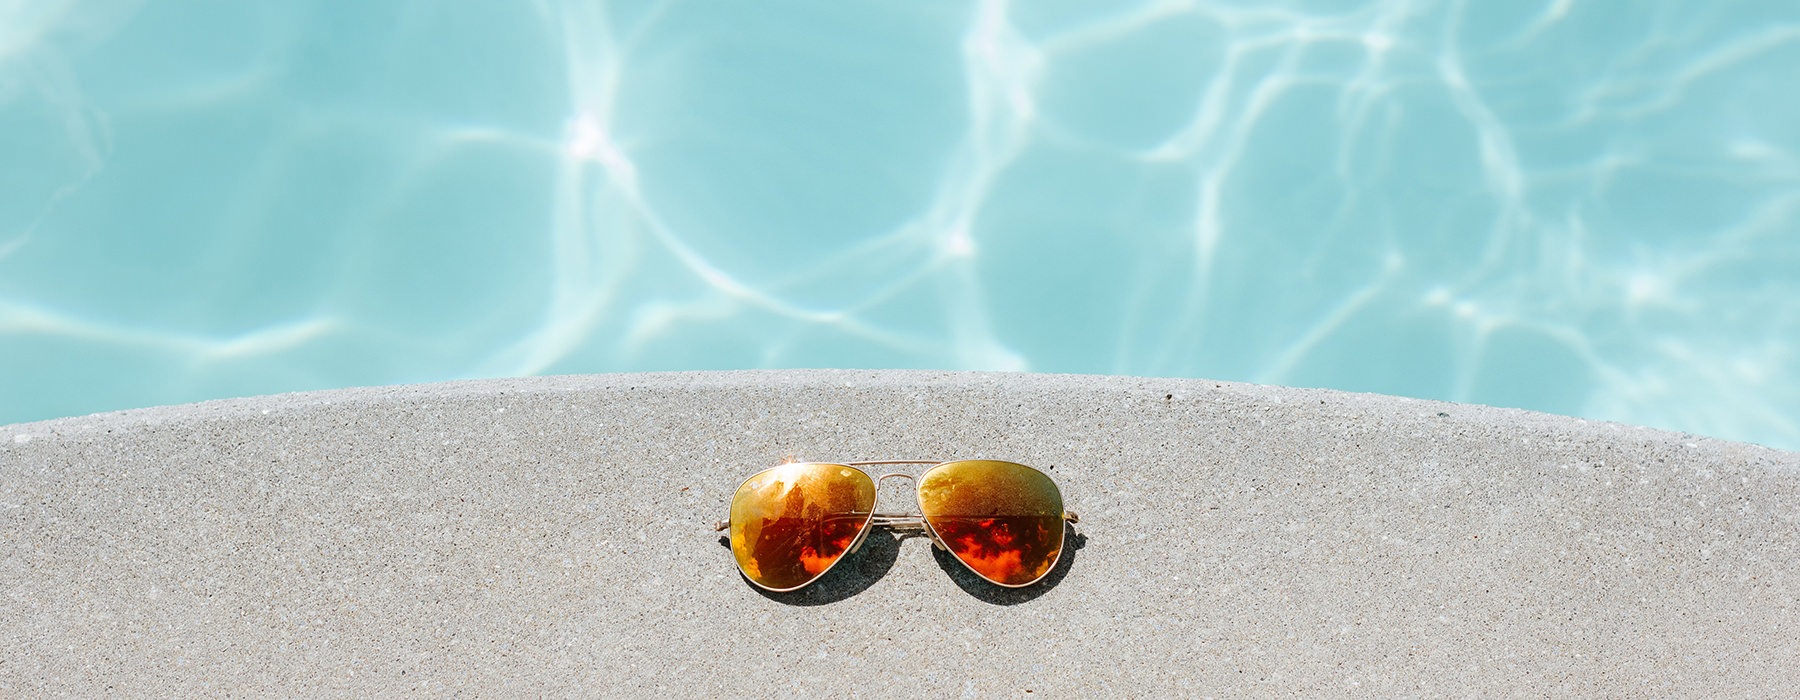 Sunglasses sitting on the ledge of the pool 